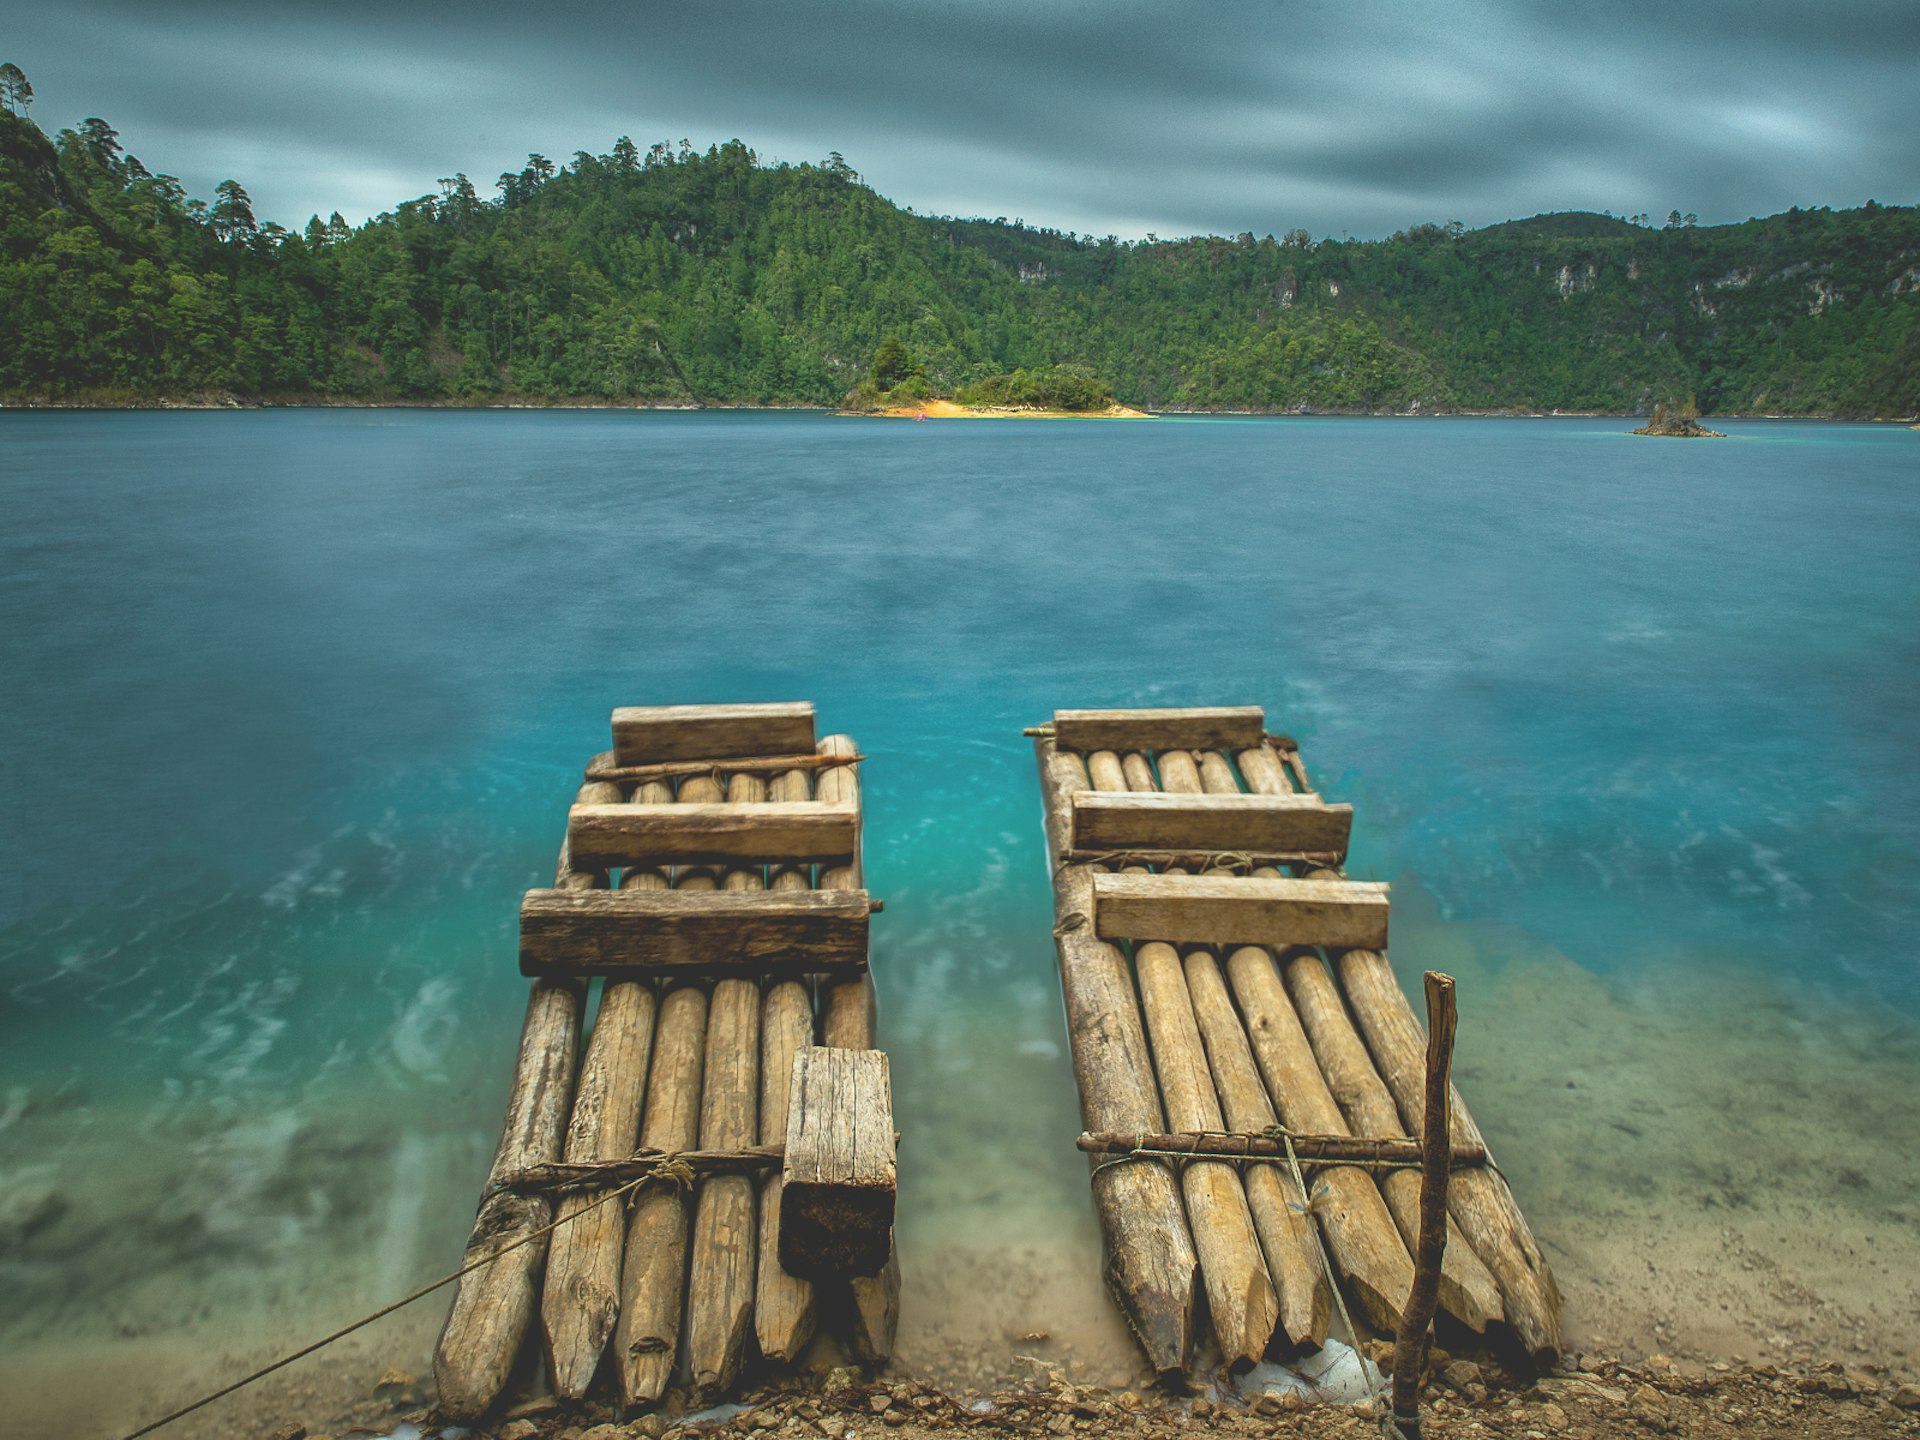 Rustic wooden rafts on Lake Montebello, Chiapas, Mexico